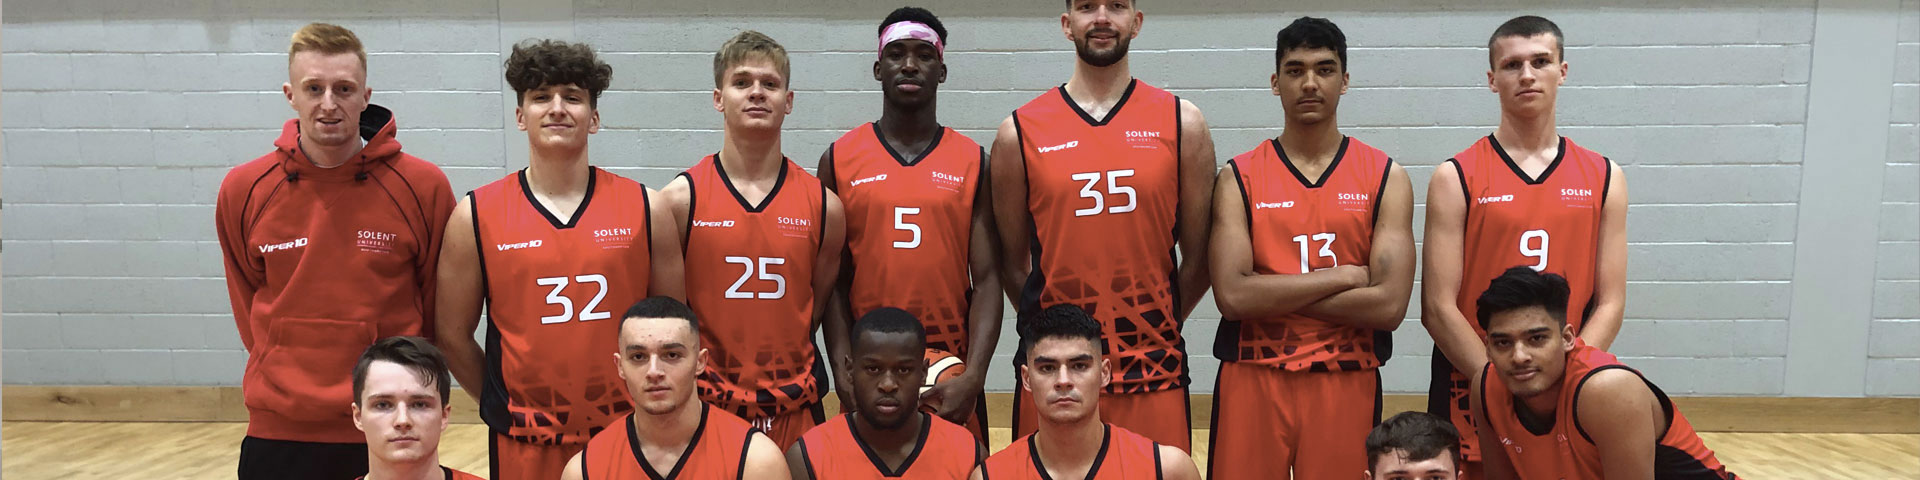 Team Solent men's basketball team